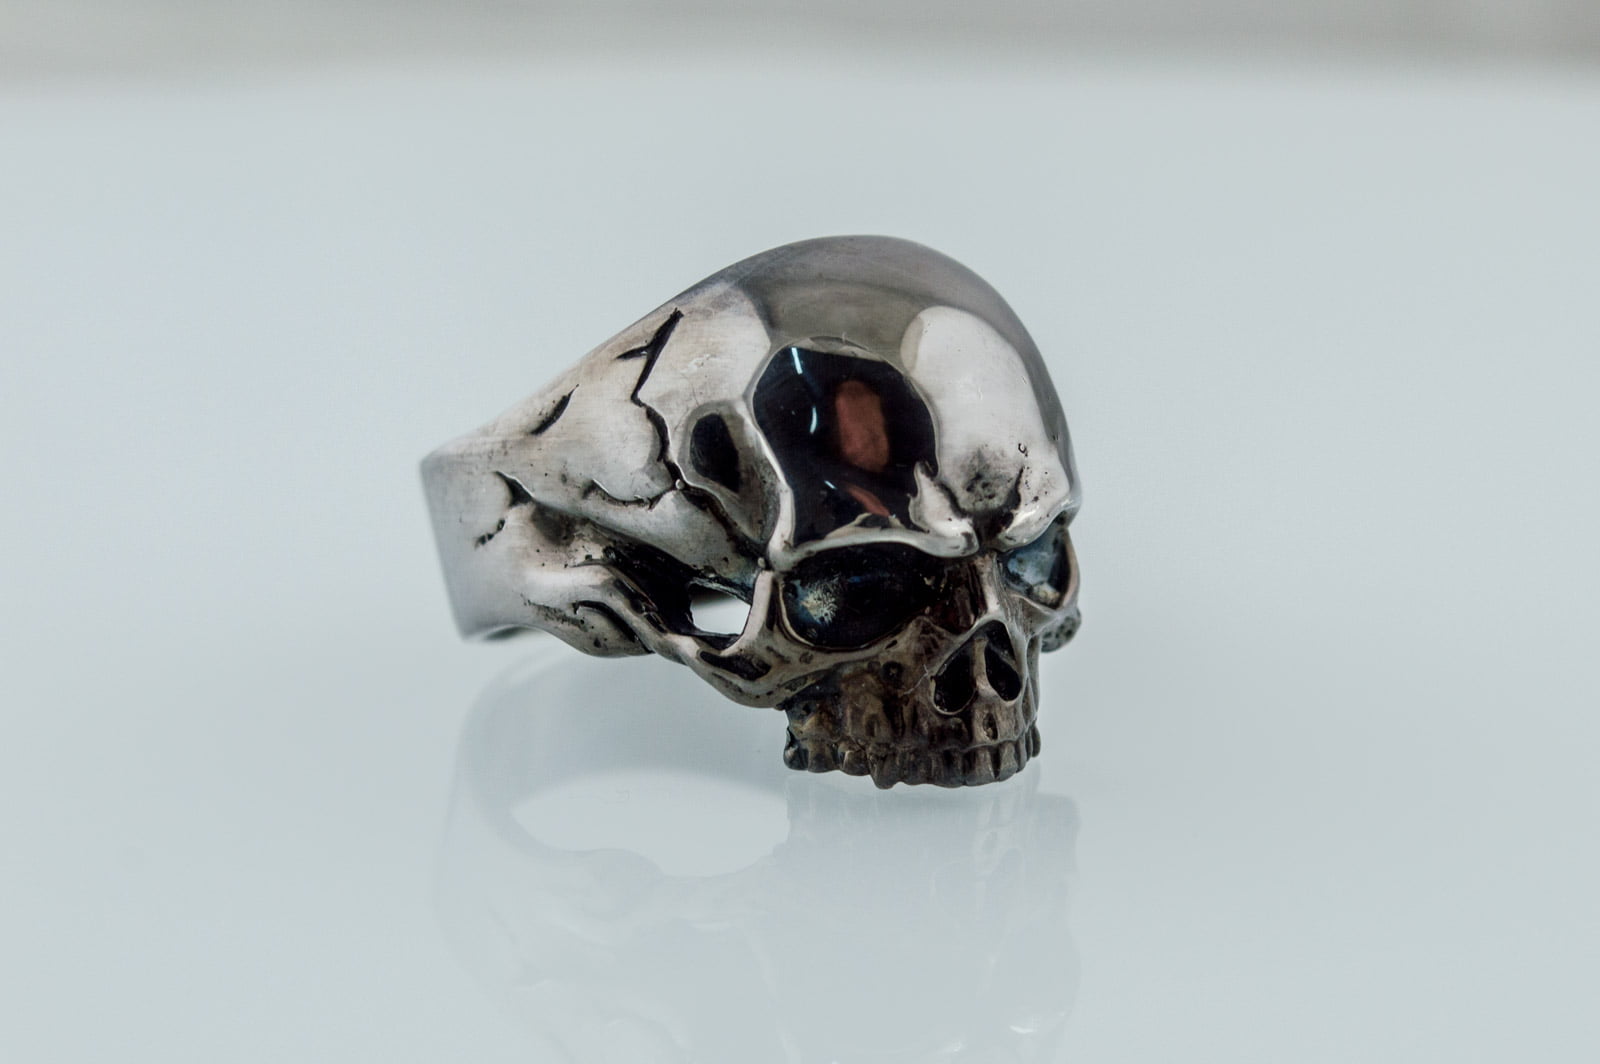 Skull Biker Ring Ruthenium Plated Sterling Silver Black Limited Edition Jewelry - vikingworkshop